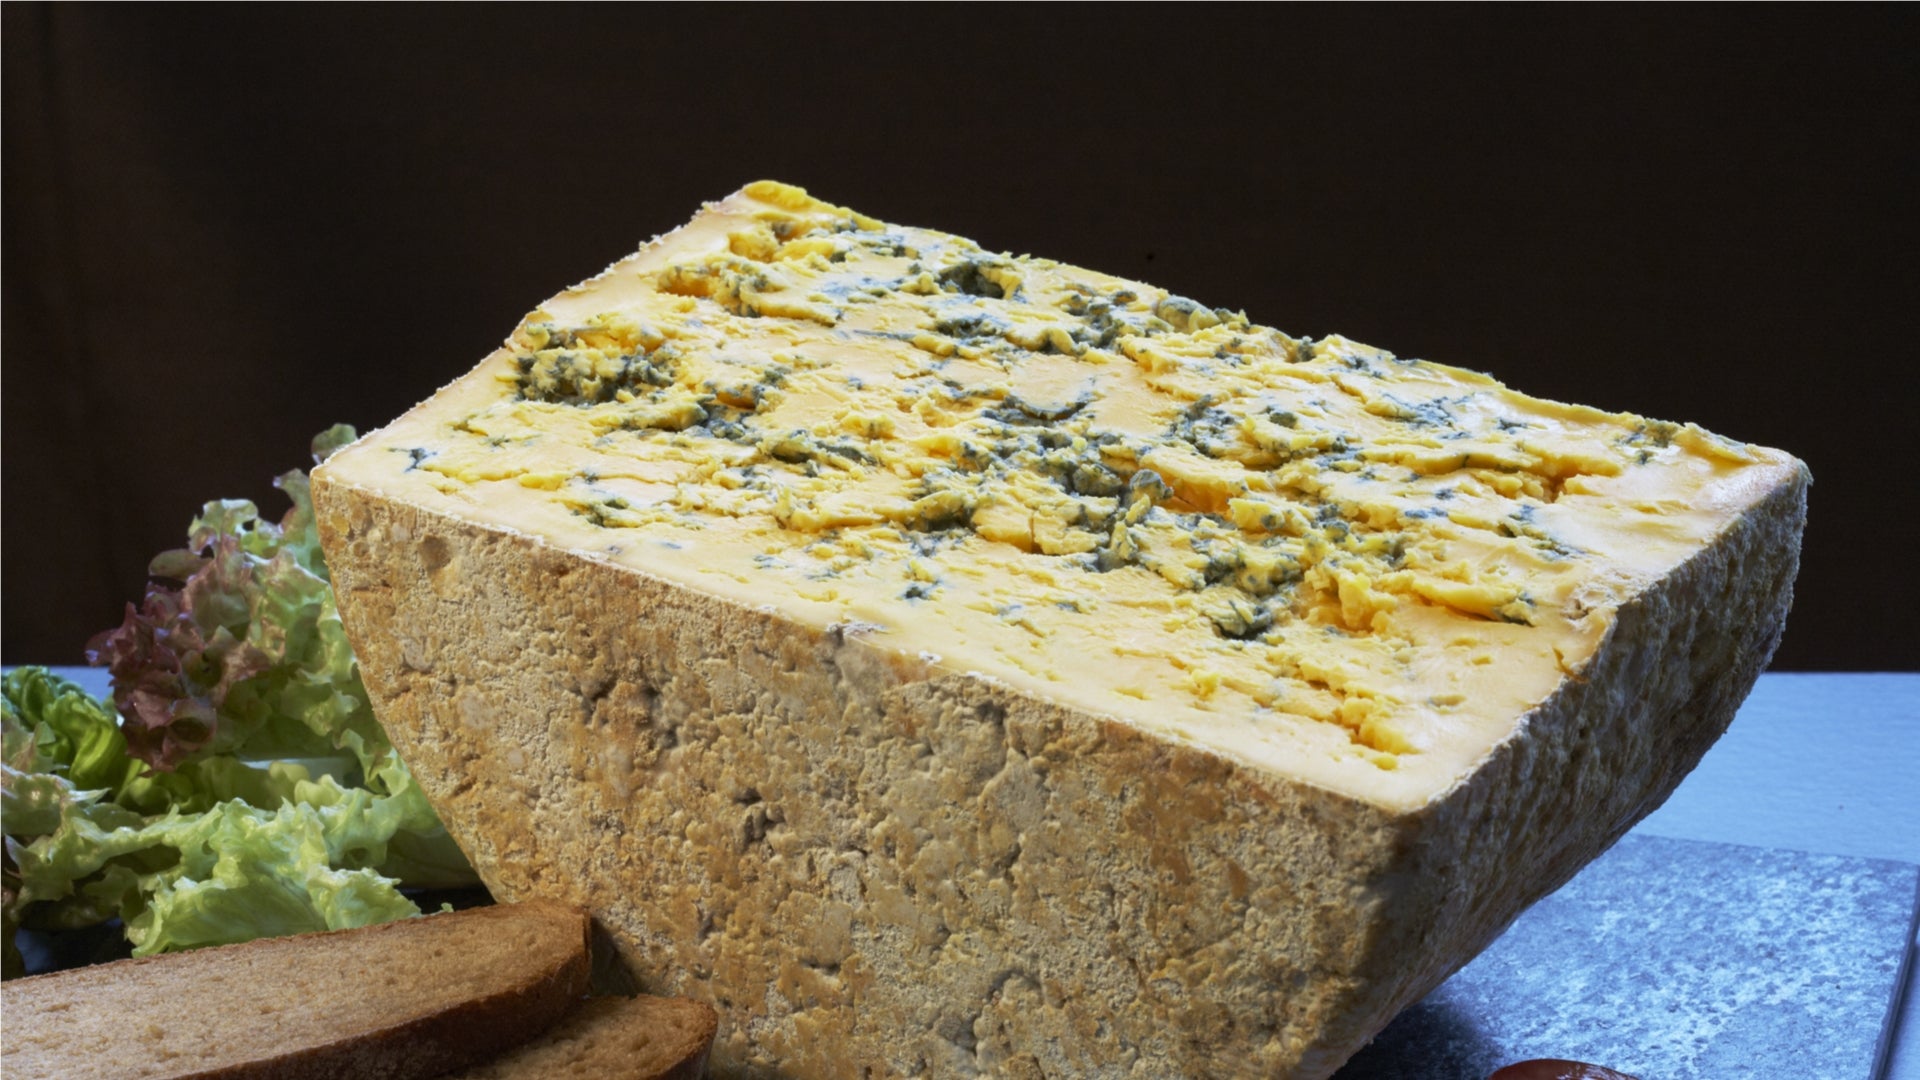 Cheese - Shropshire Blue 8 oz